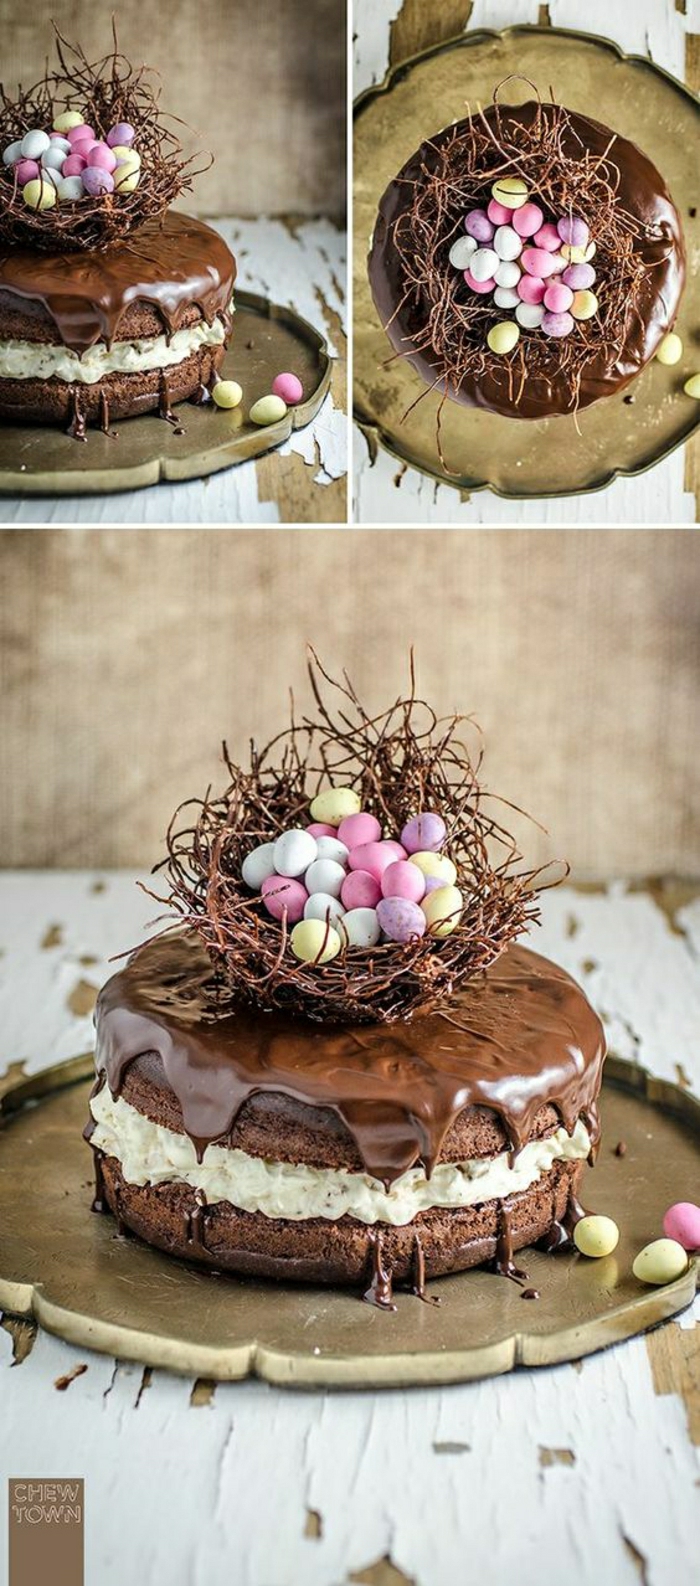 Шоколадова торта с великденски мотив Великденска кошница с малки цветни яйца